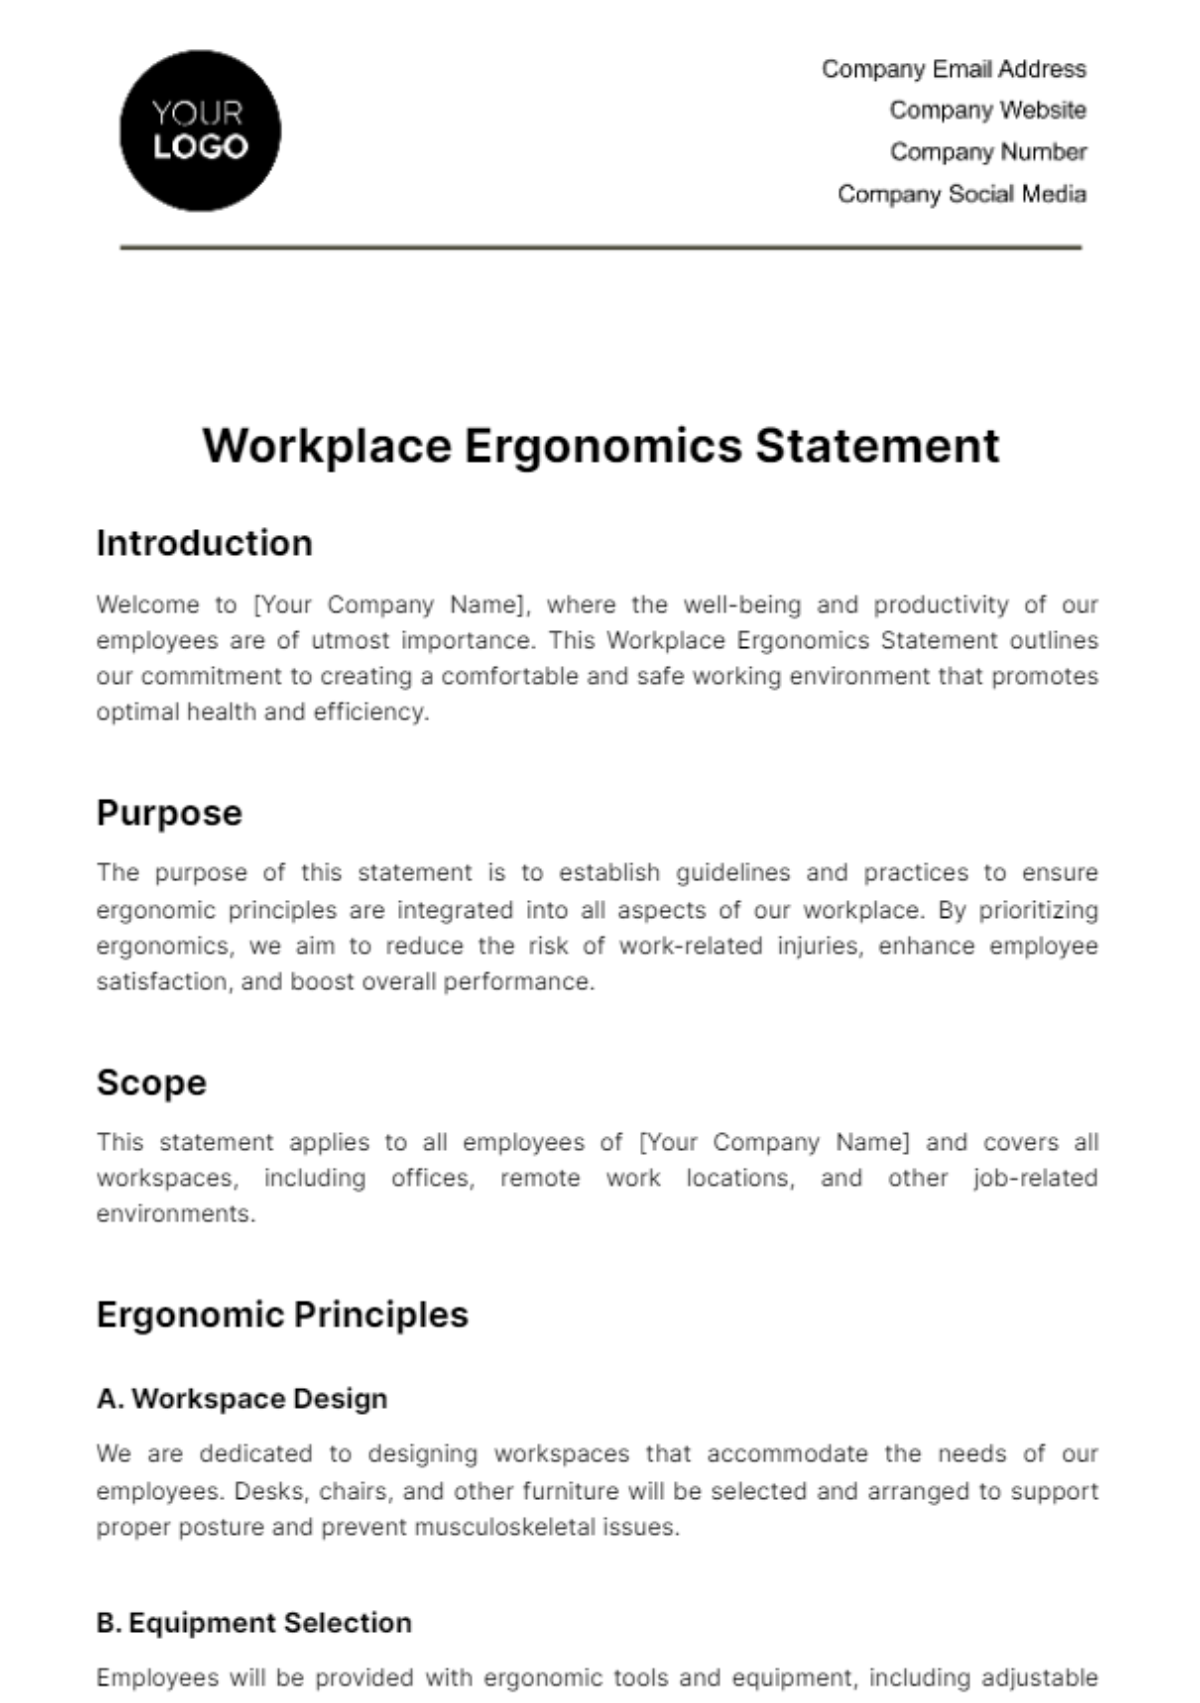 Workplace Ergonomics Statement Template